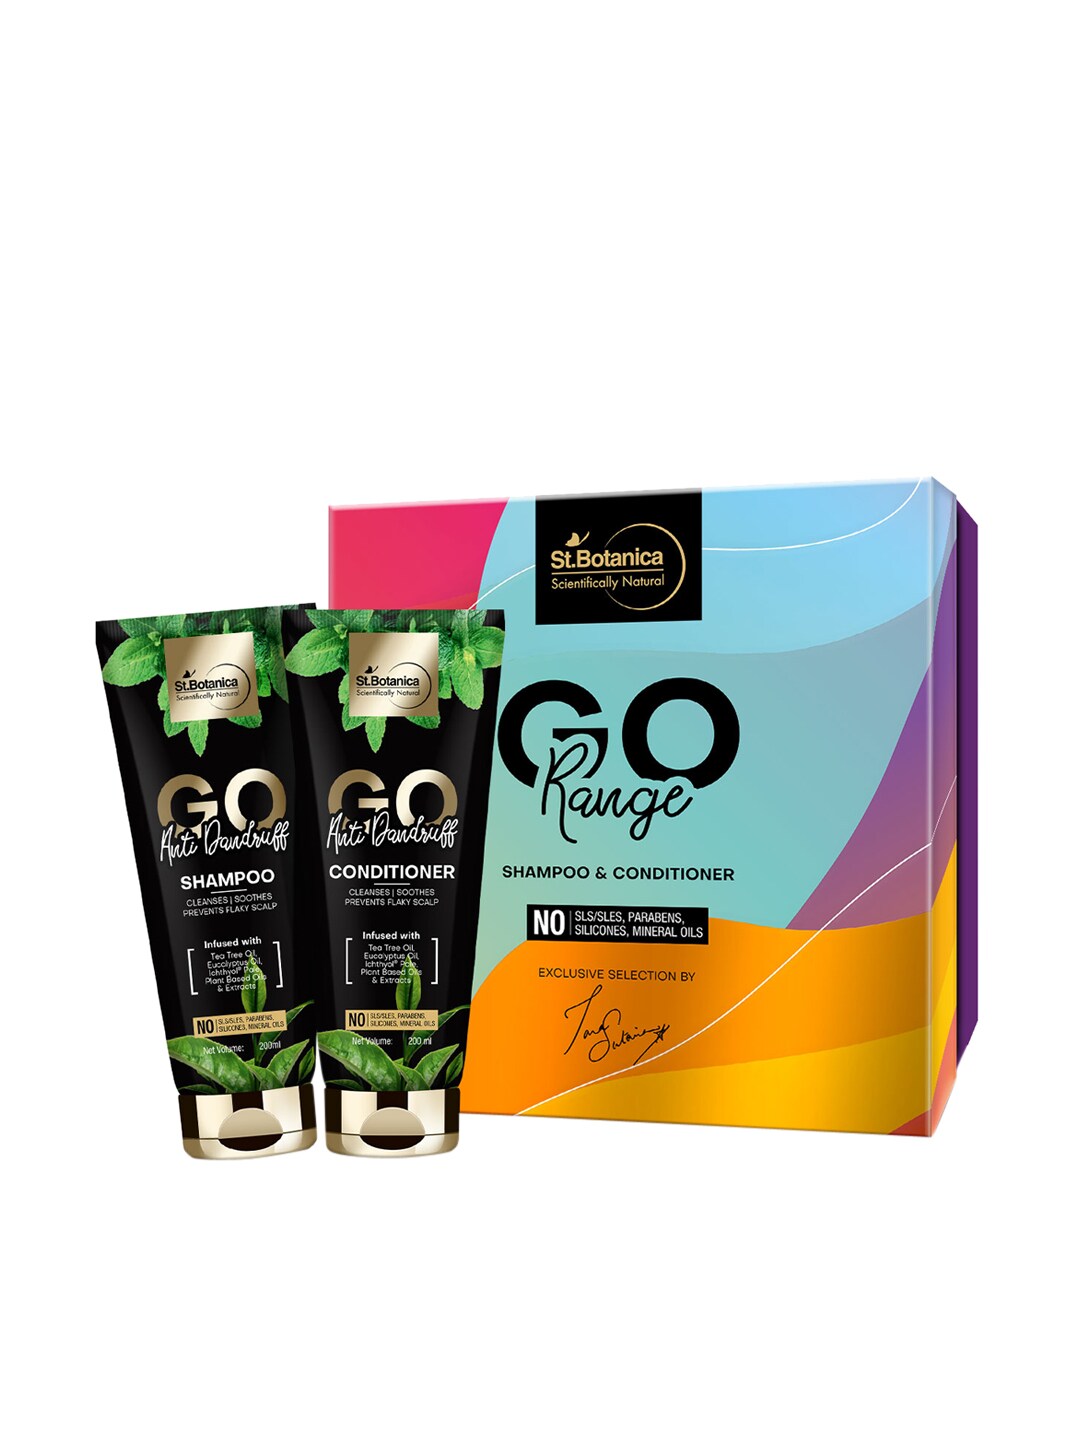 StBotanica Set of 2 Go Anti-Dandruff Shampoo & Conditioner 400 ml Price in India